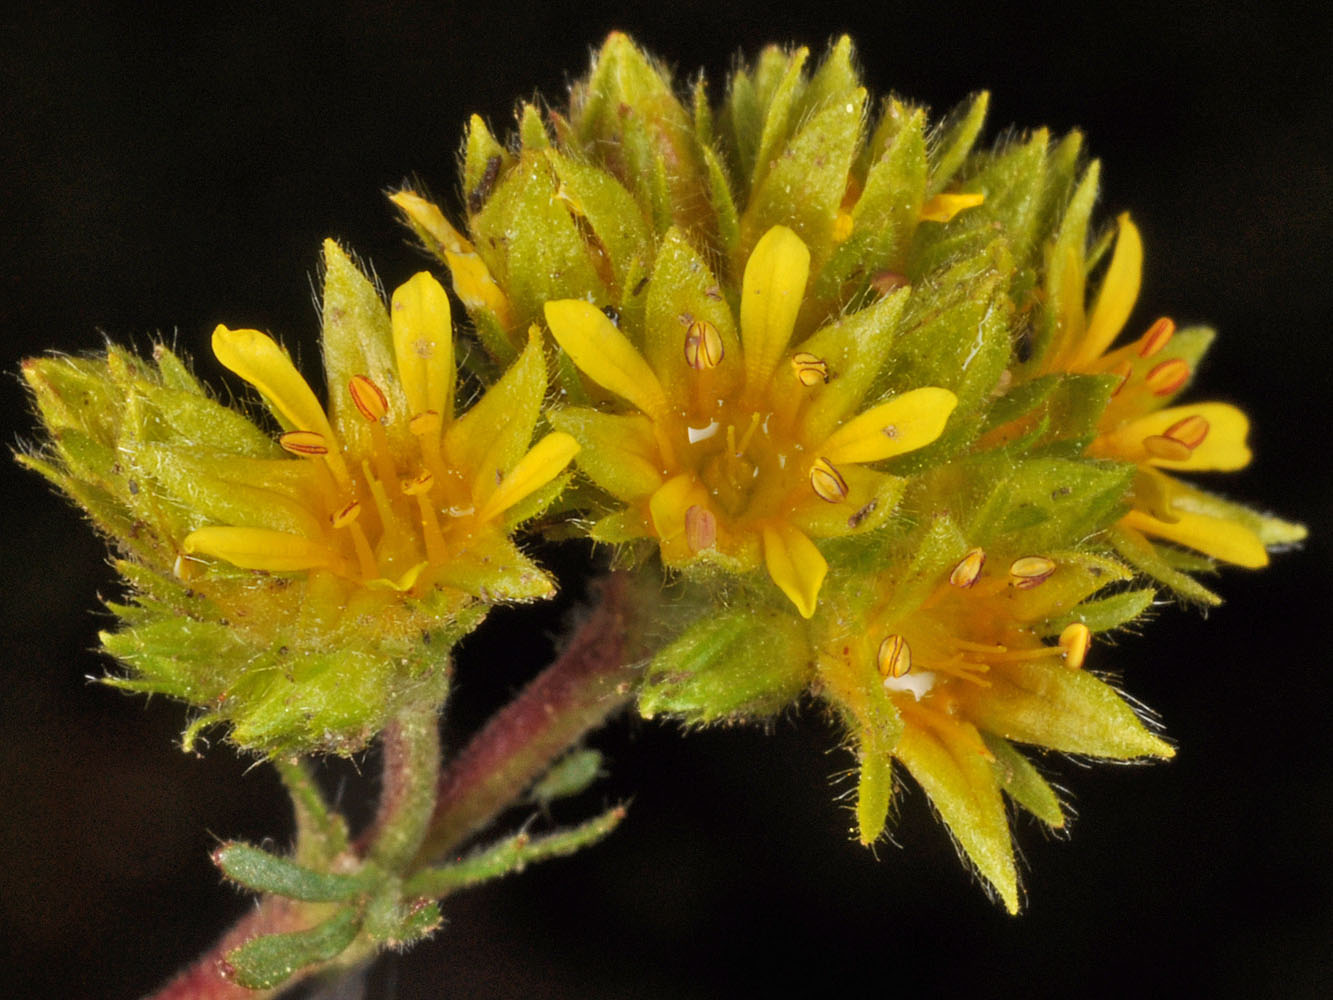 Flora of Eastern Washington Image: Ivesia gordonii